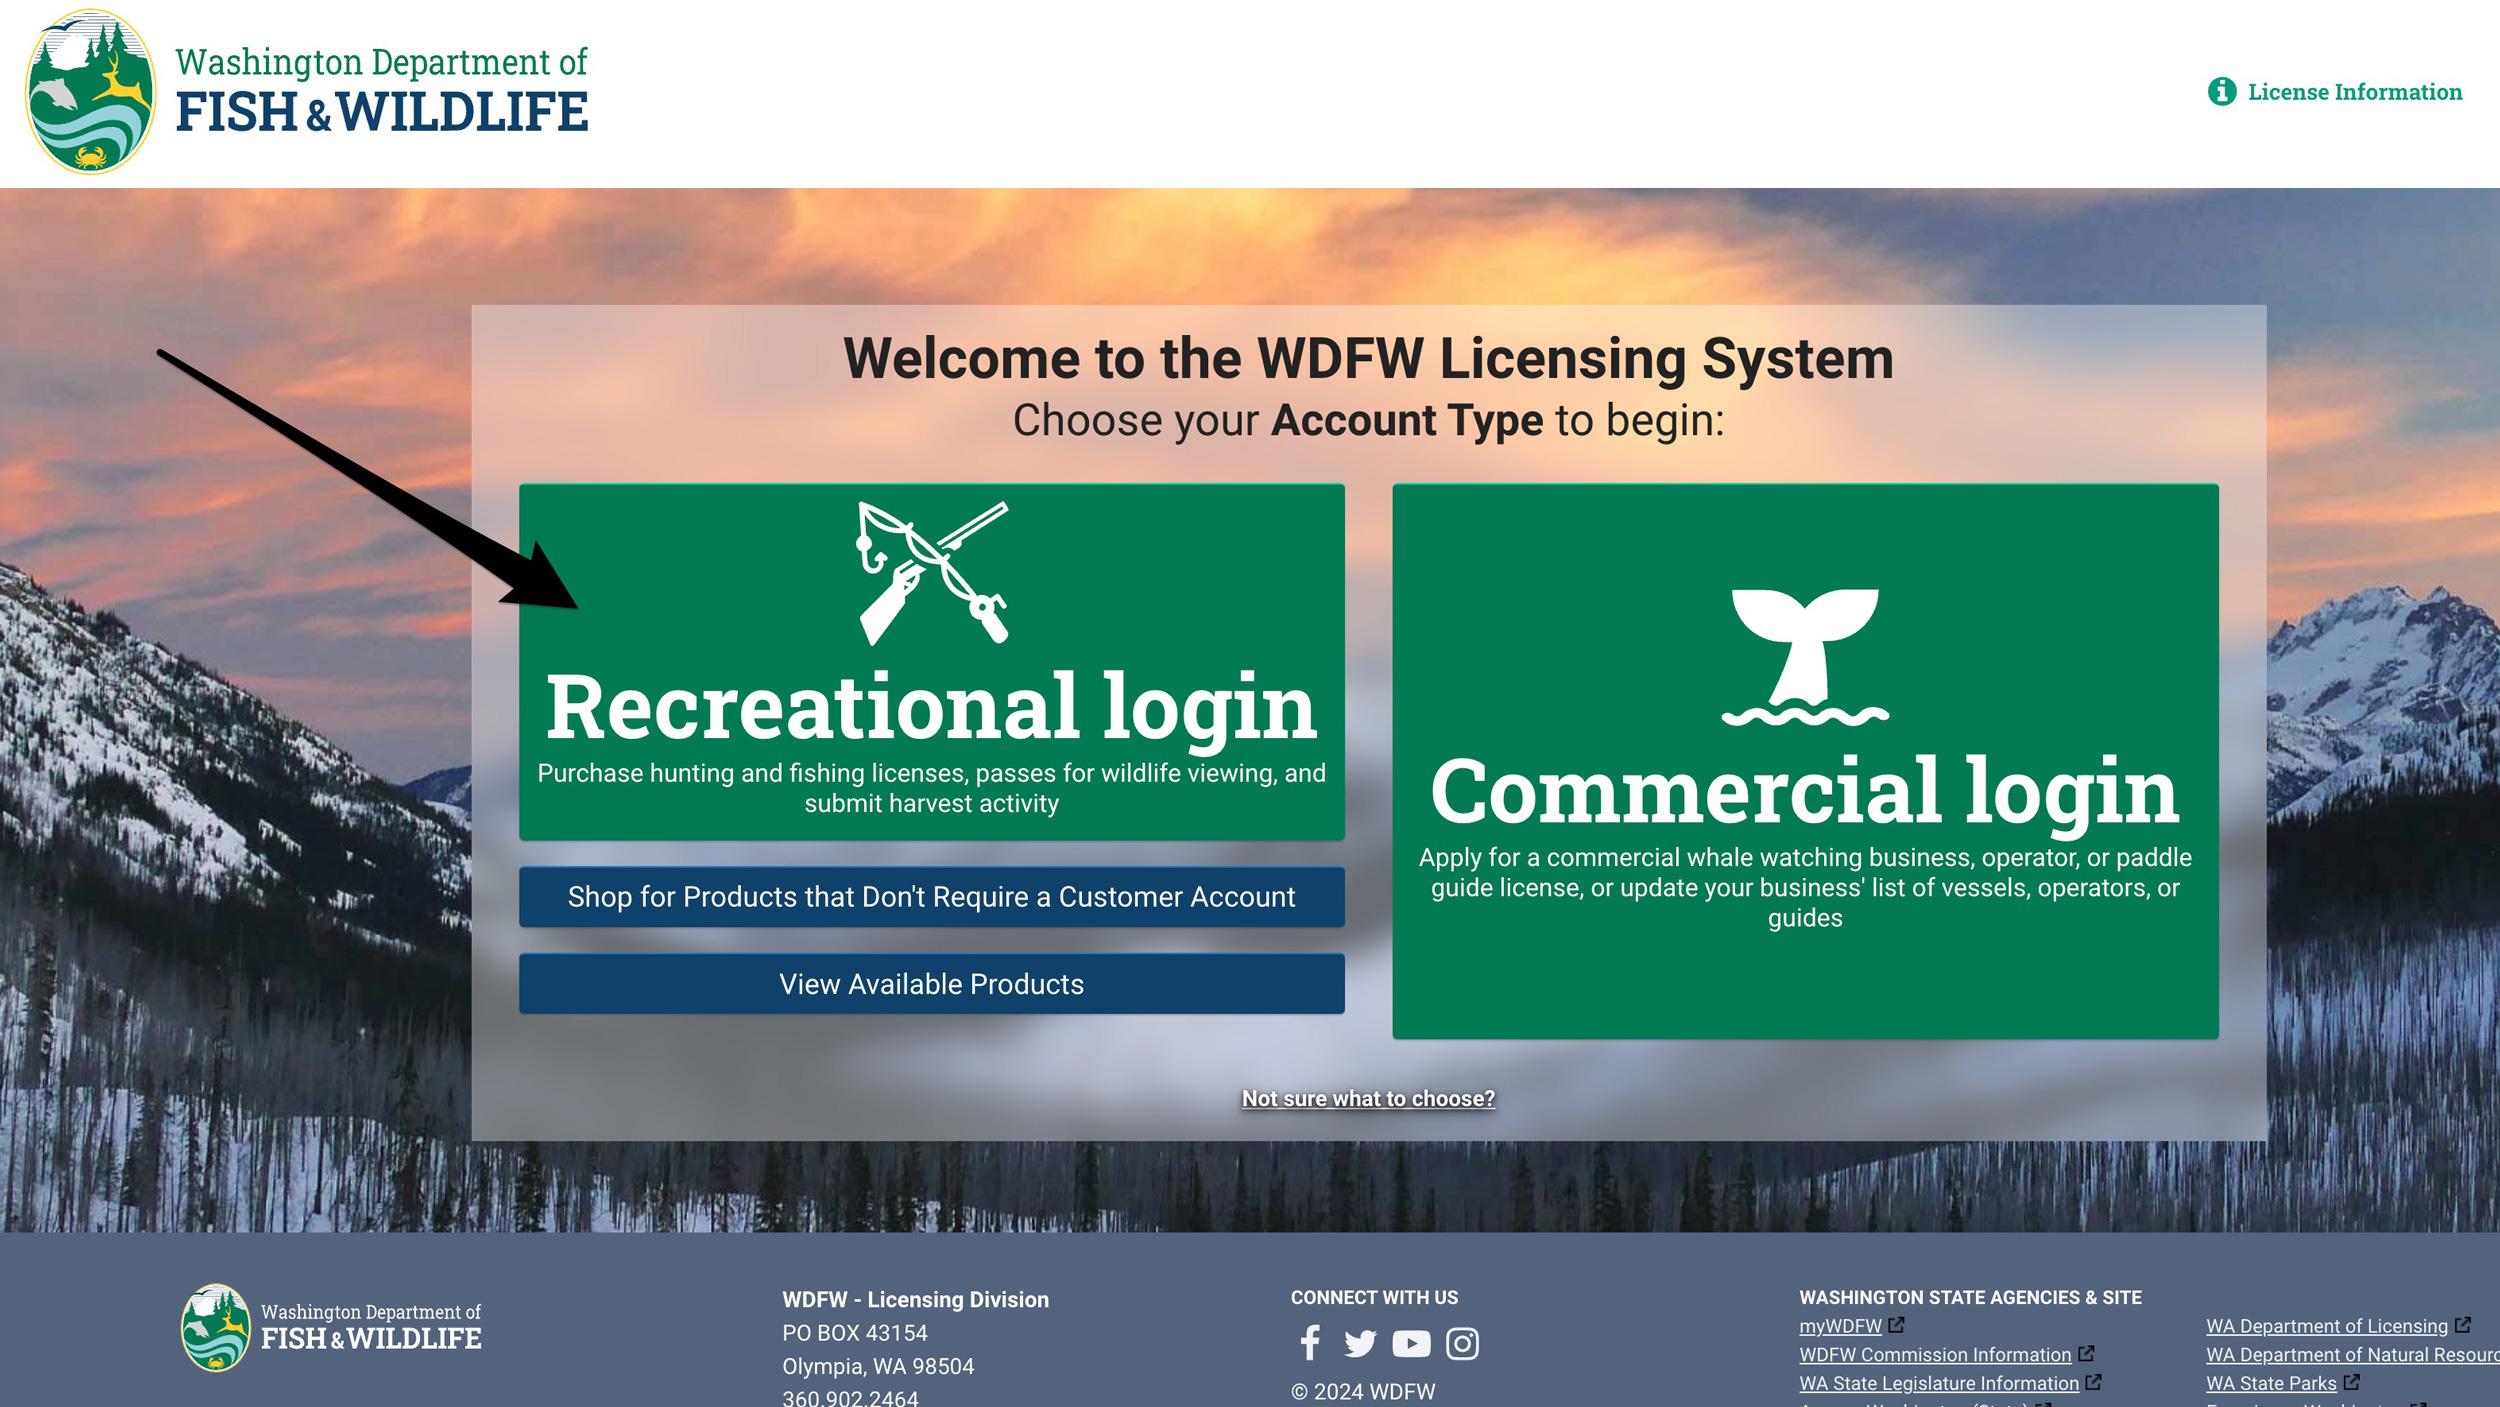 Washington Department of Fish and Wildlife licensing page login